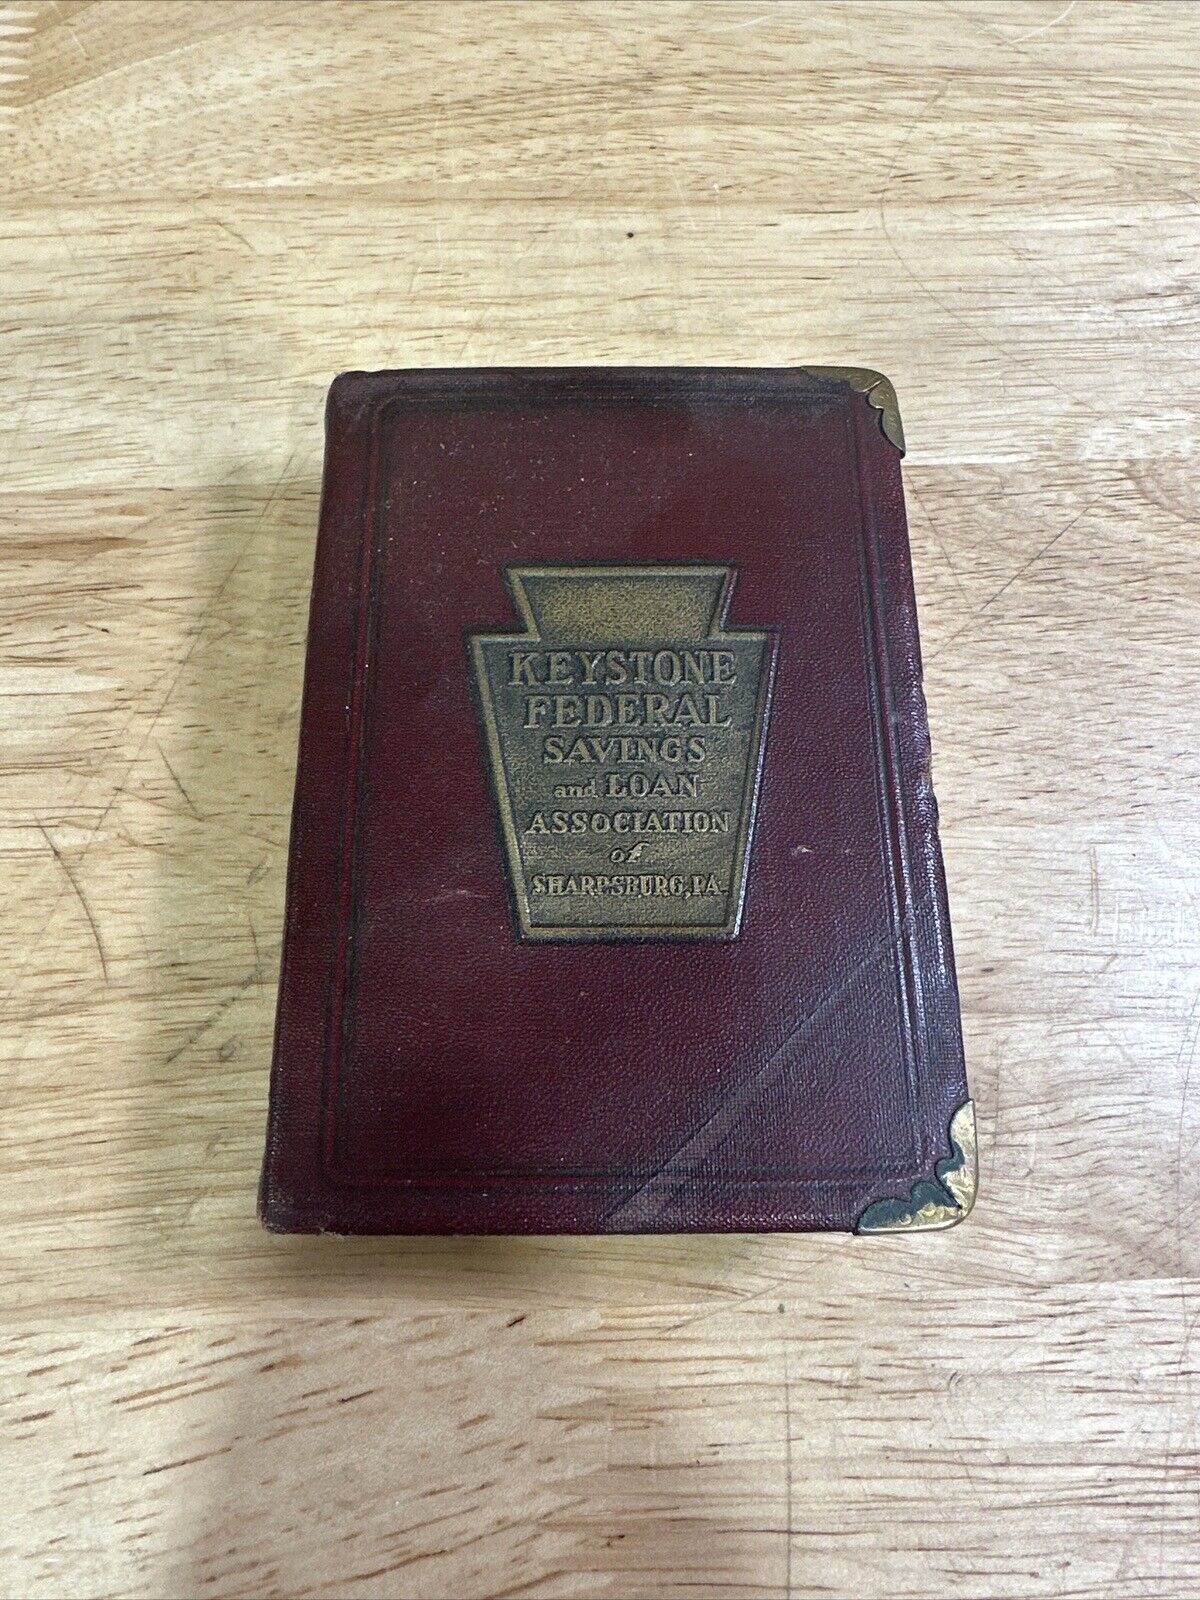 Vintage Keystone Federal Savings And Loan Association Book Coin Bank 